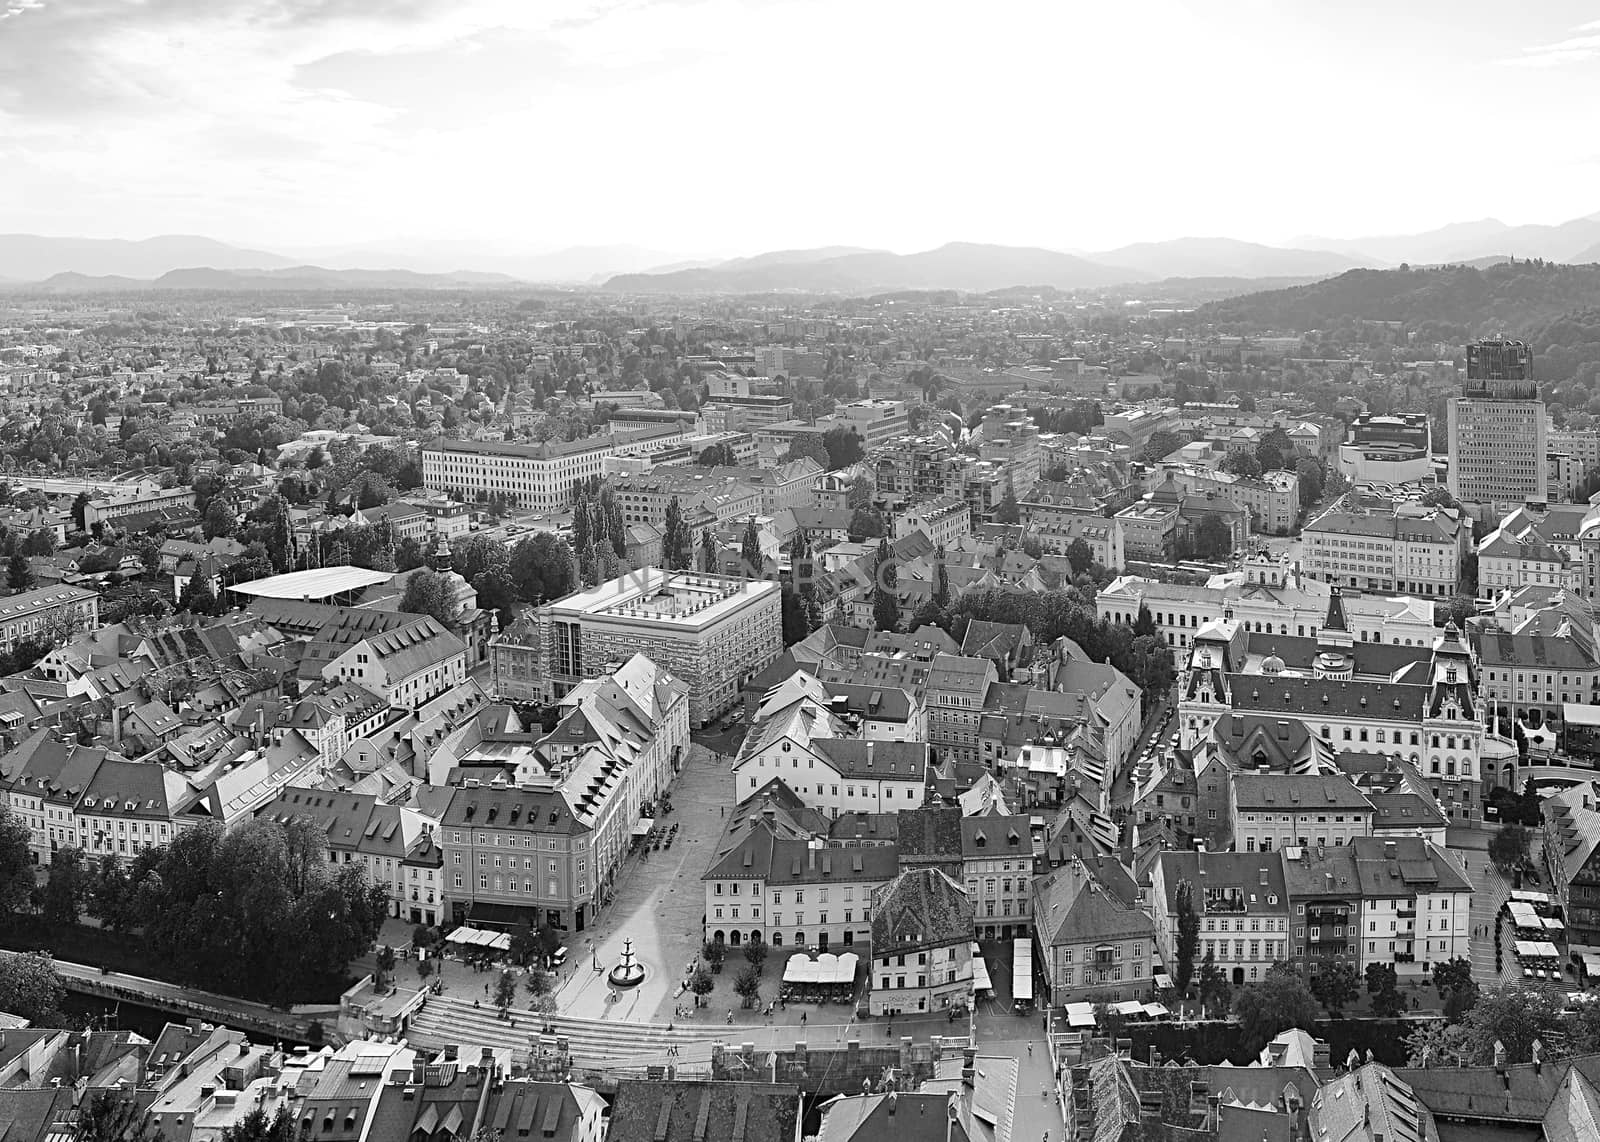 Ljubljana cityscape by joyfull